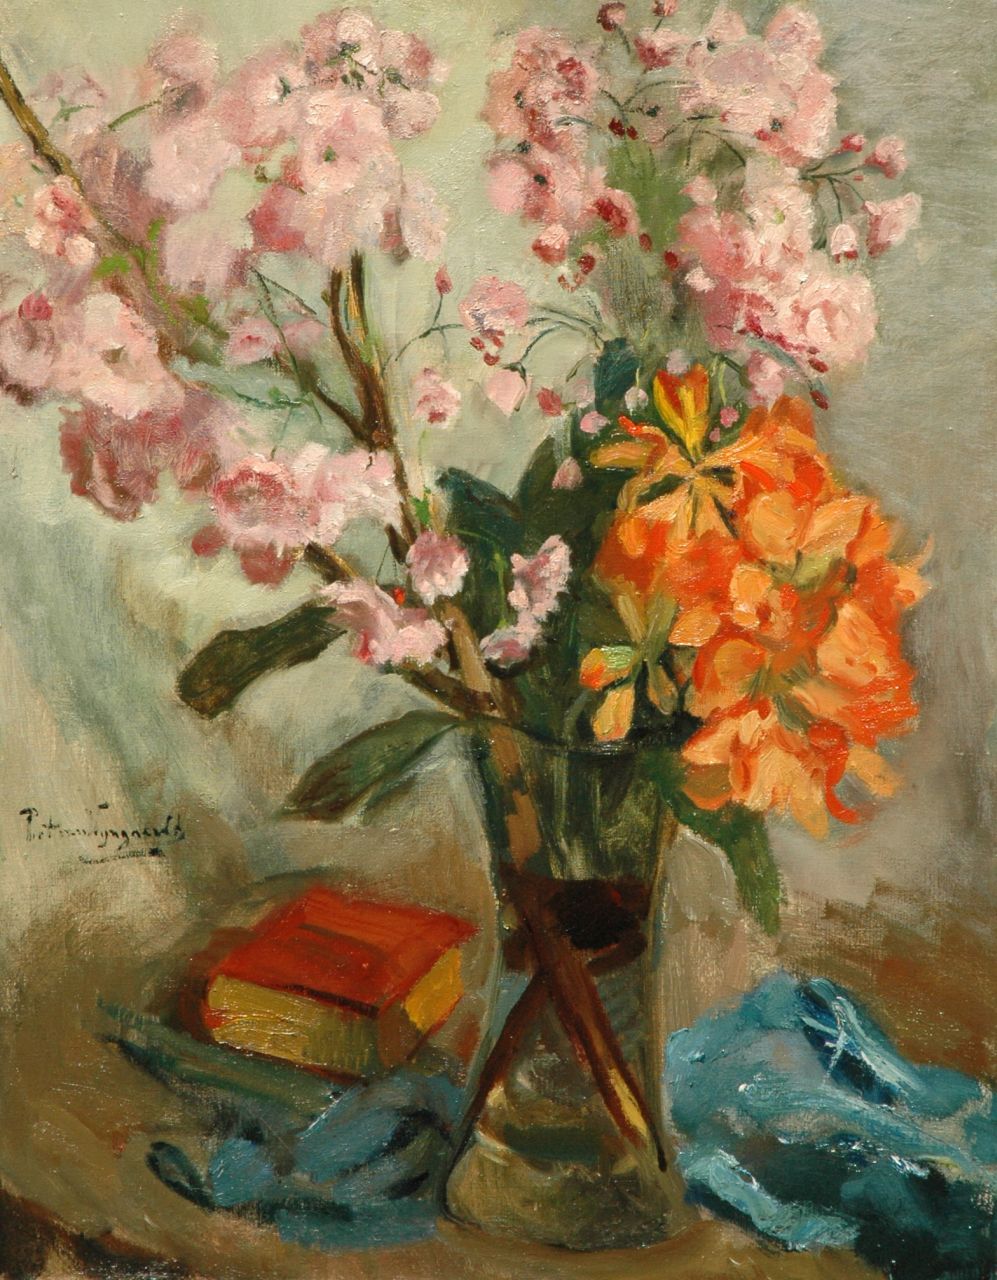 Wijngaerdt P.T. van | Petrus Theodorus 'Piet' van Wijngaerdt, Cherry blossom and azalea in a vase, oil on canvas 90.5 x 70.5 cm, signed m.l. and on the reverse